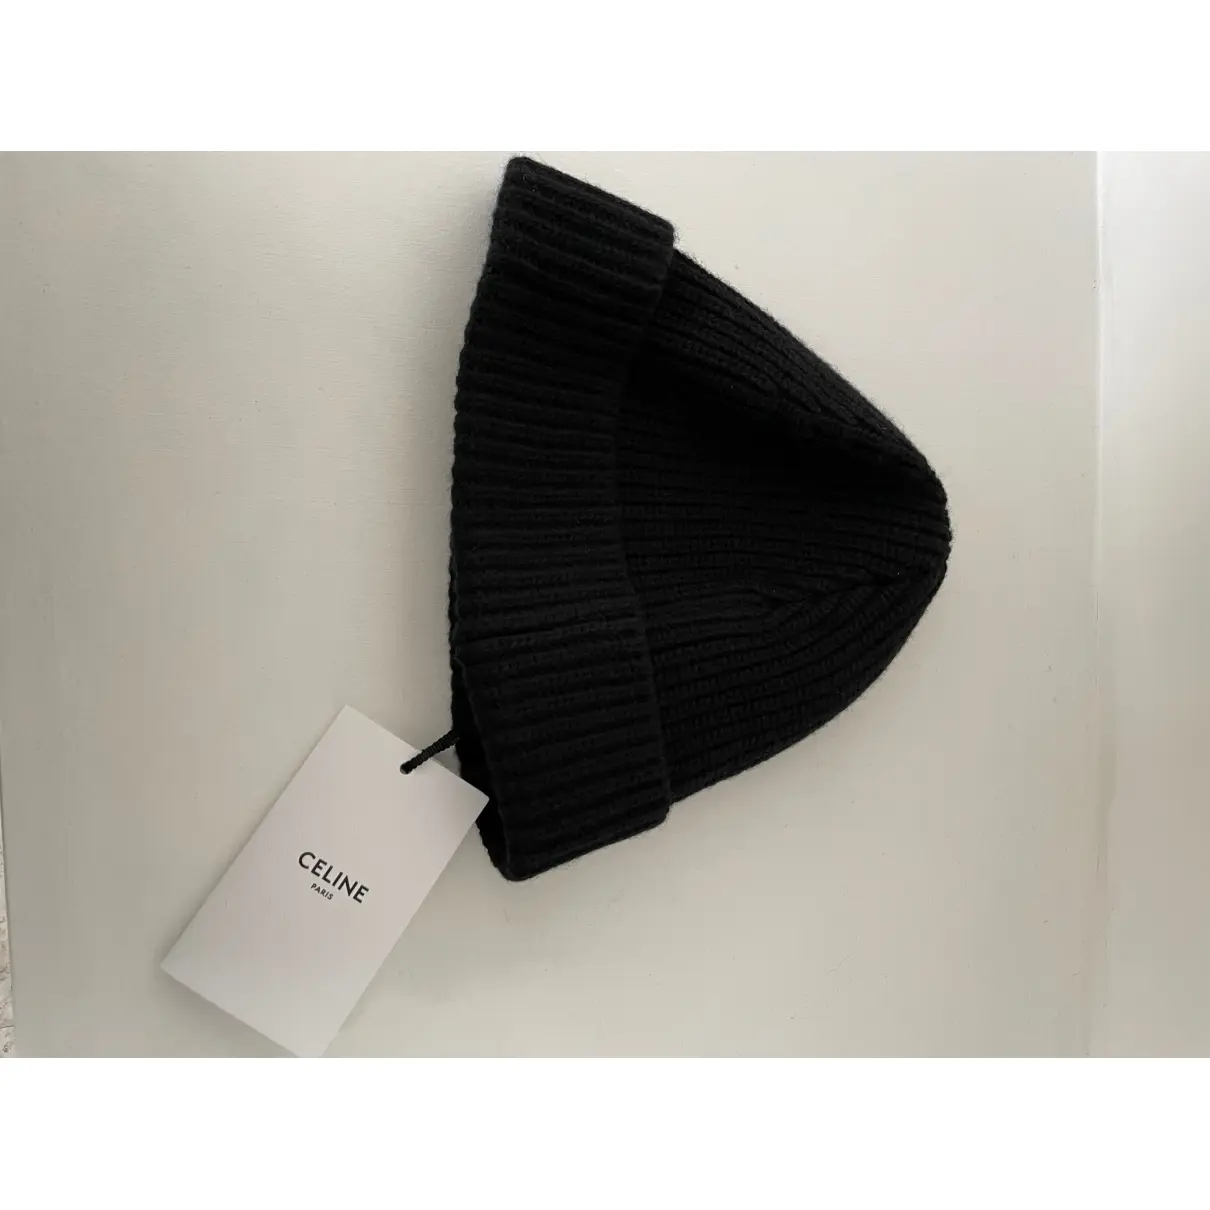 Buy Celine Wool hat online